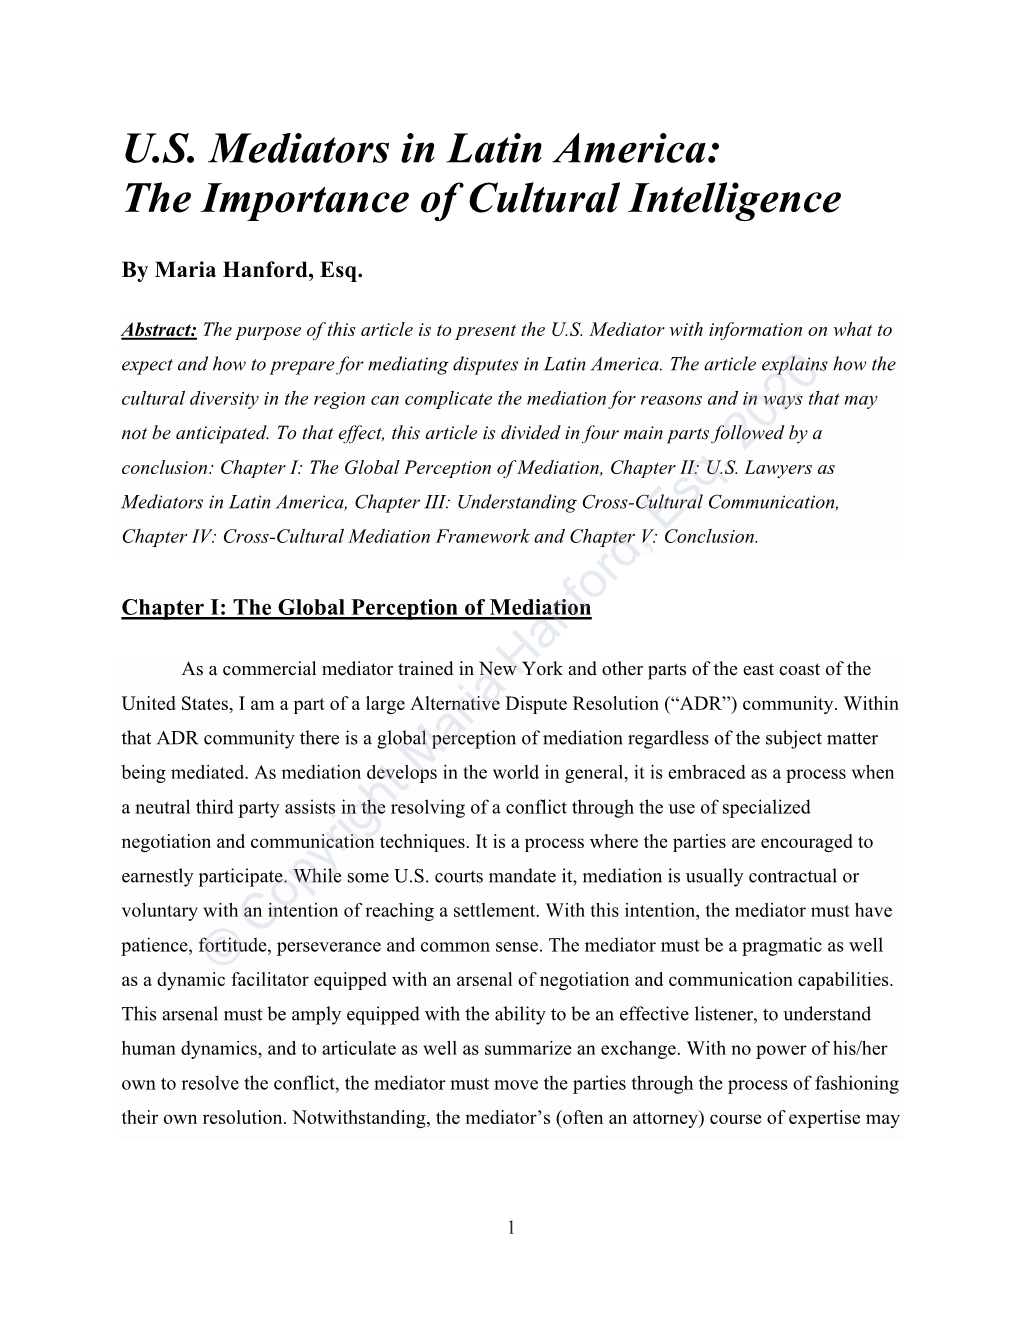 U.S. Mediators in Latin America: the Importance of Cultural Intelligence